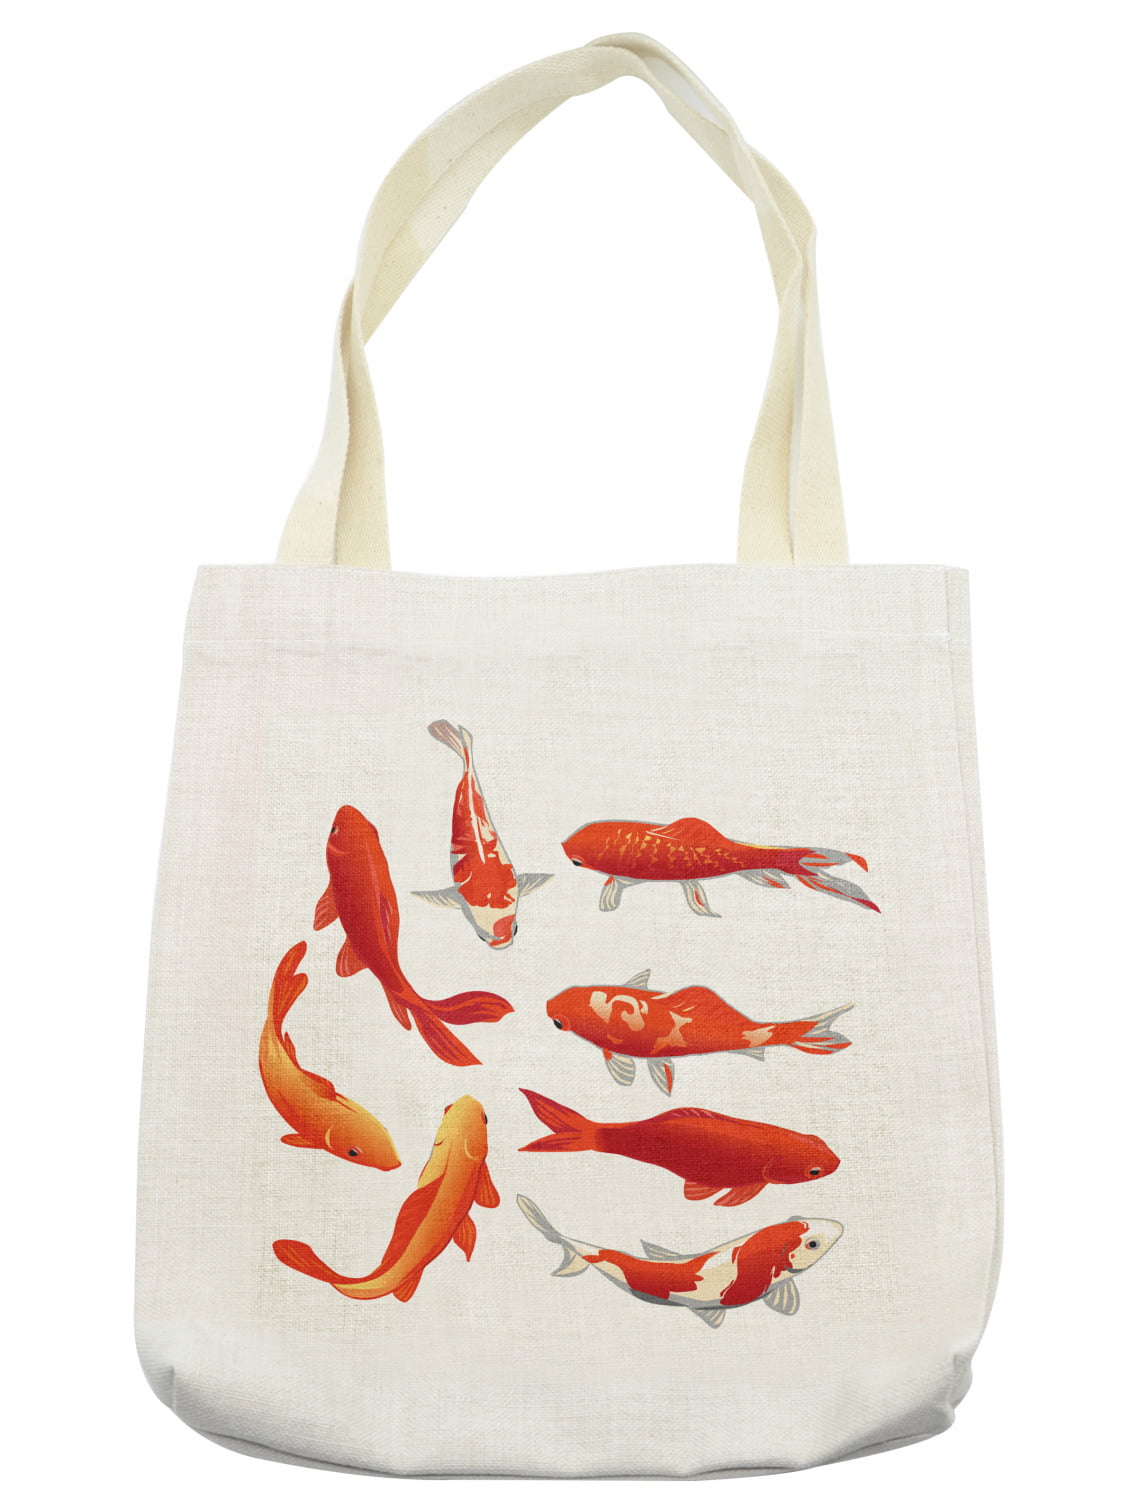 TEQUAN Reusable Shoulder Tote Bags, Japan Pond Koi Carp Prints Polyester  Casual Shopping Grocery Bag for Women - Walmart.com